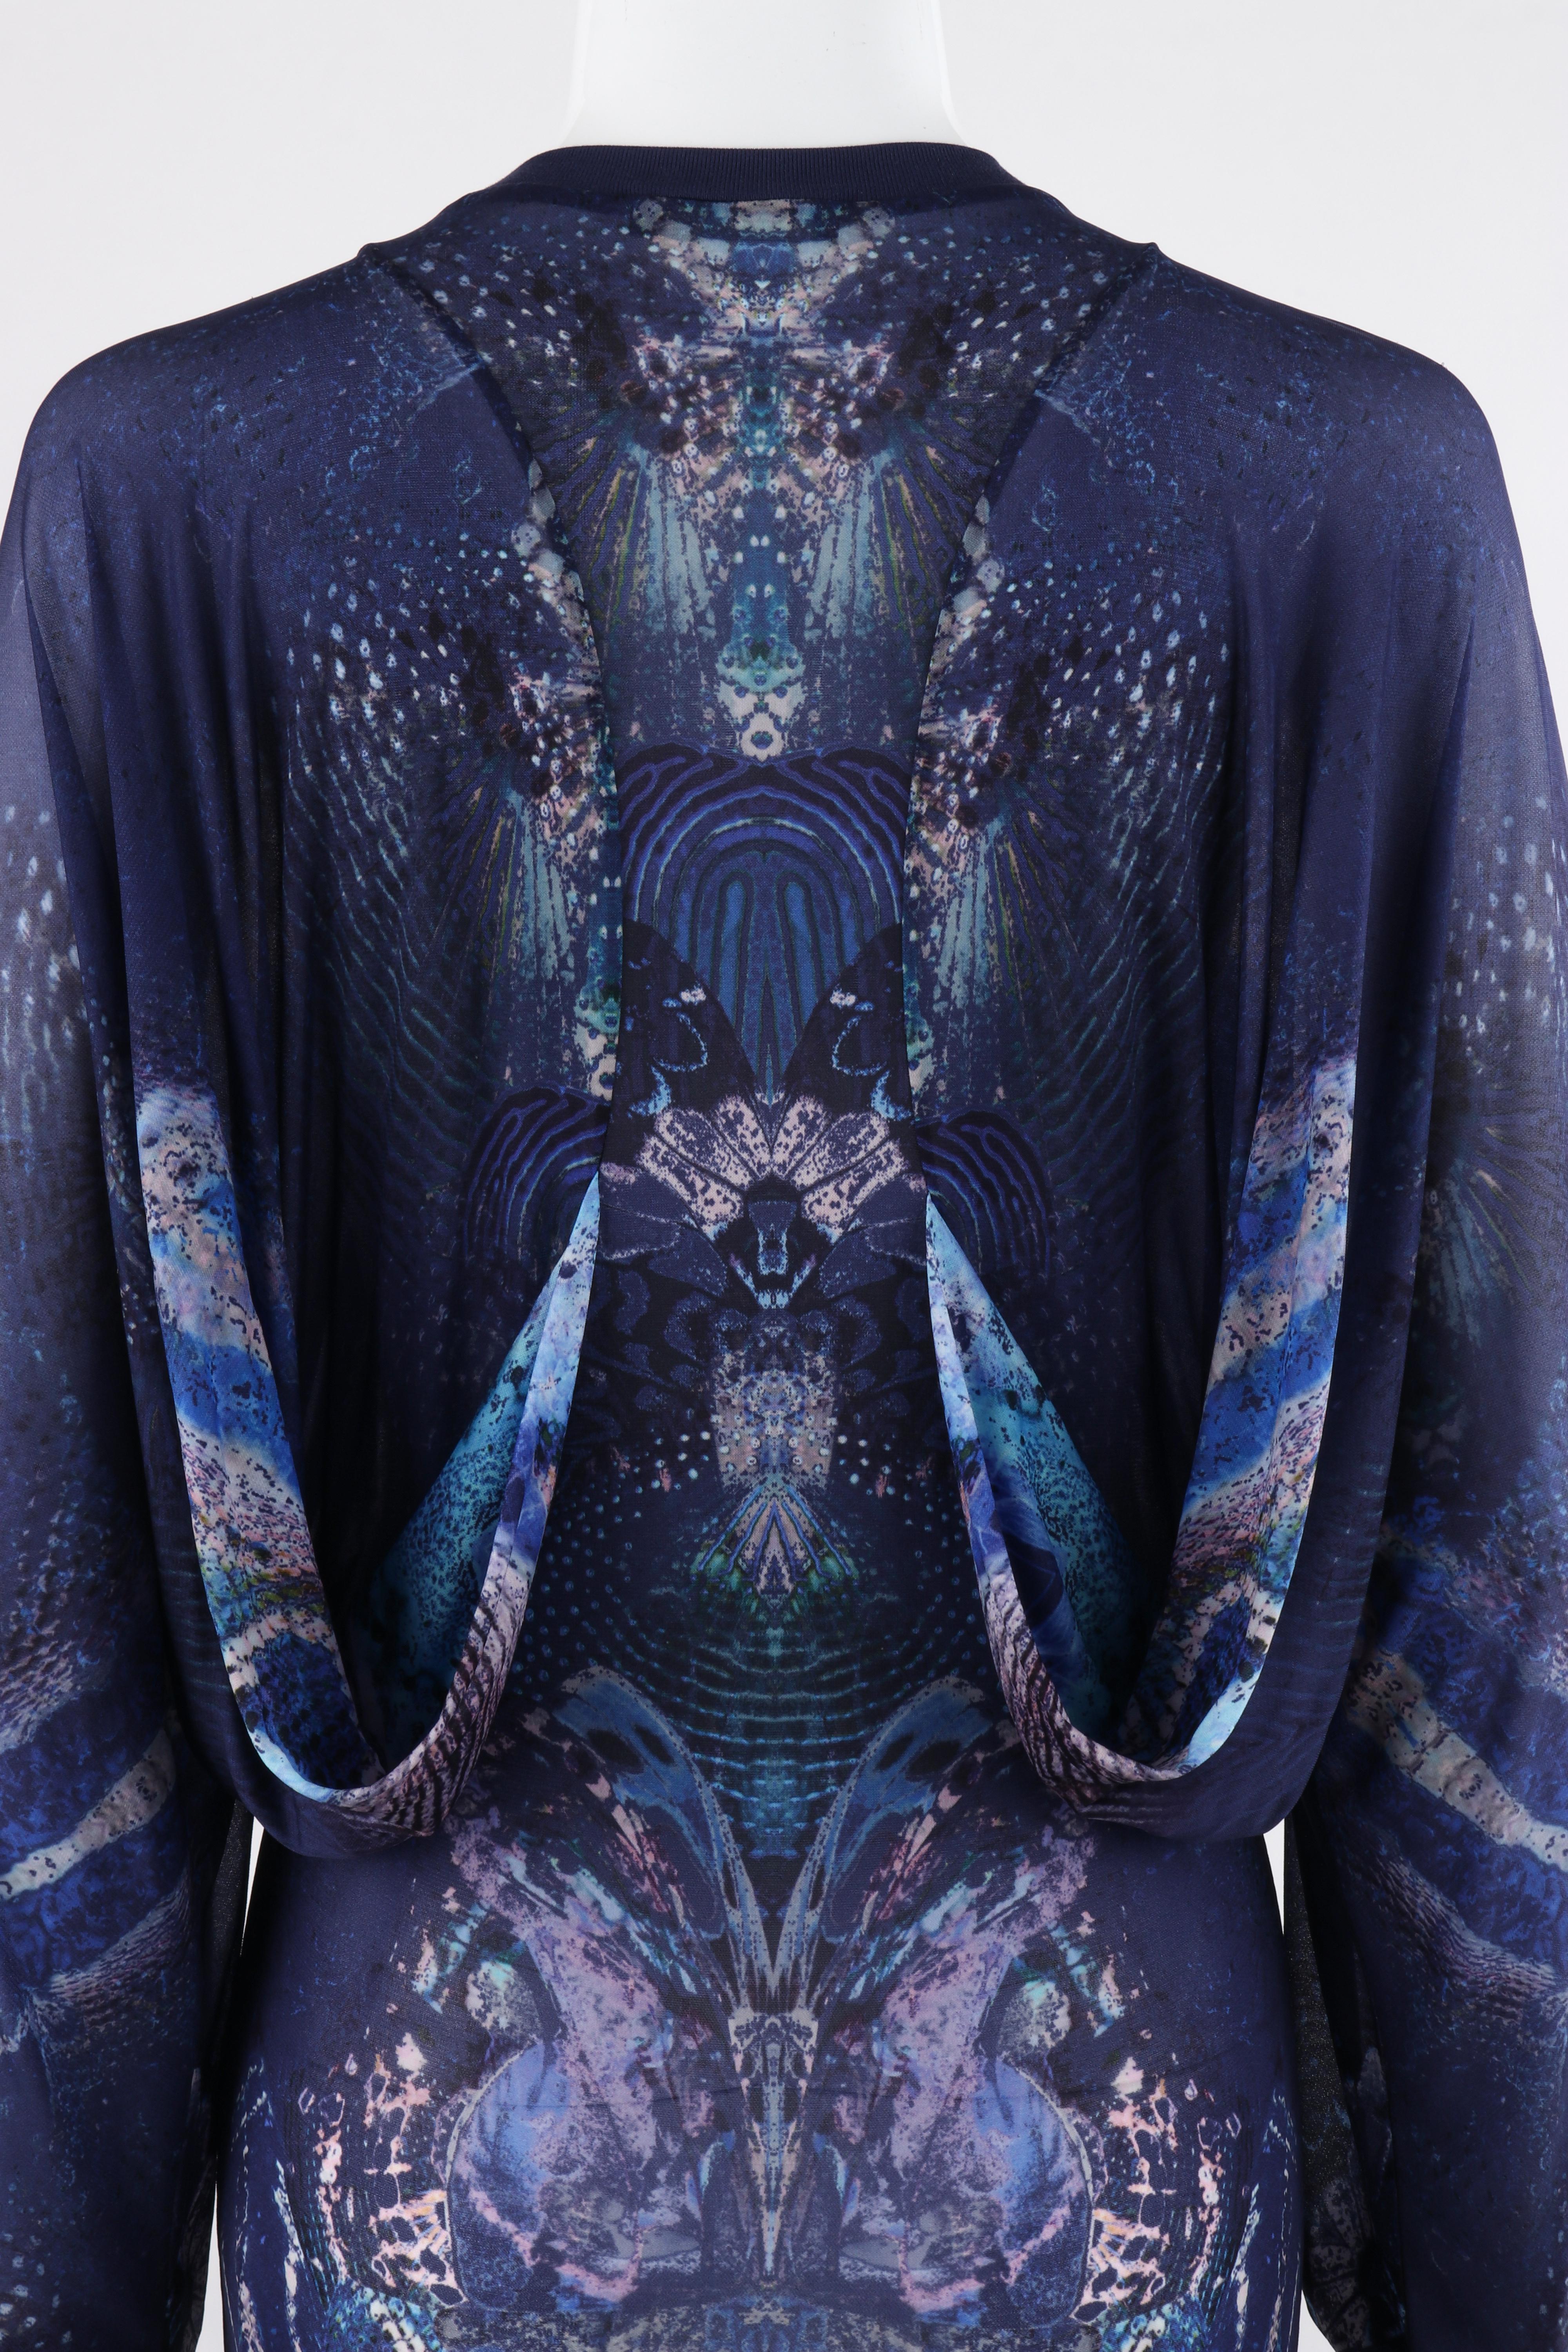 ALEXANDER McQUEEN S/S 2010 “Plato's Atlantis” Kaleidoscope Dolman Sleeve Dress  For Sale 1